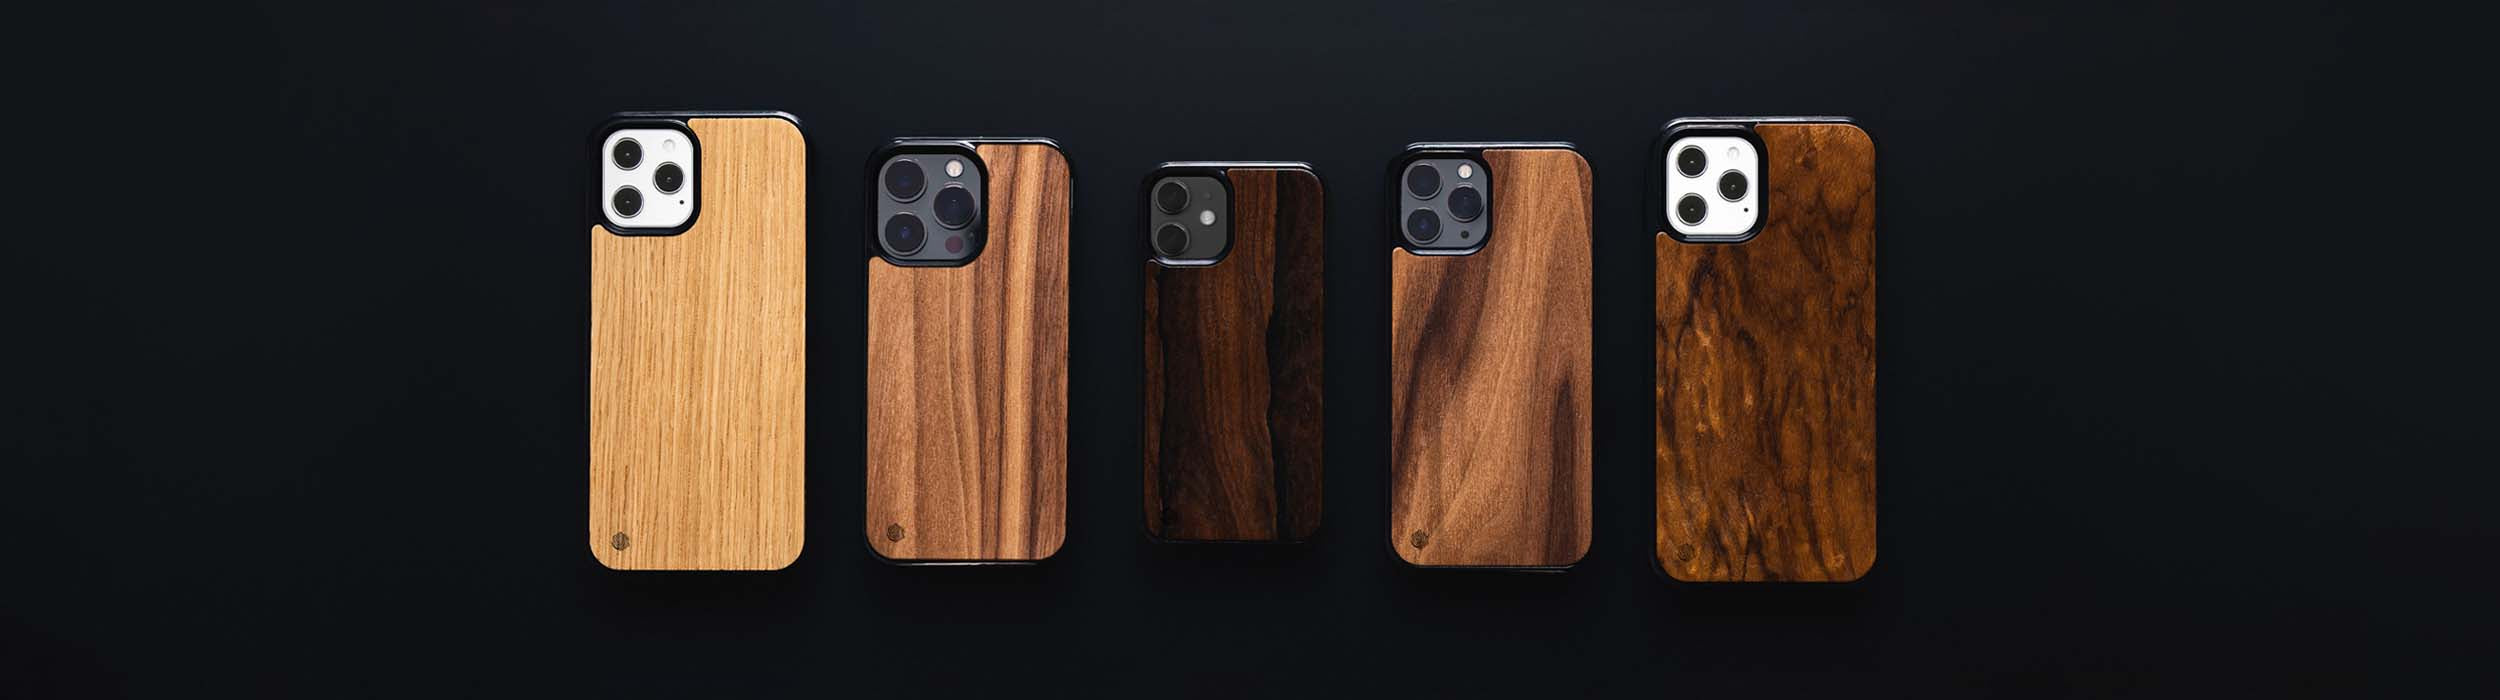 Apple iPhone 12 MINI Wooden Phone Cases